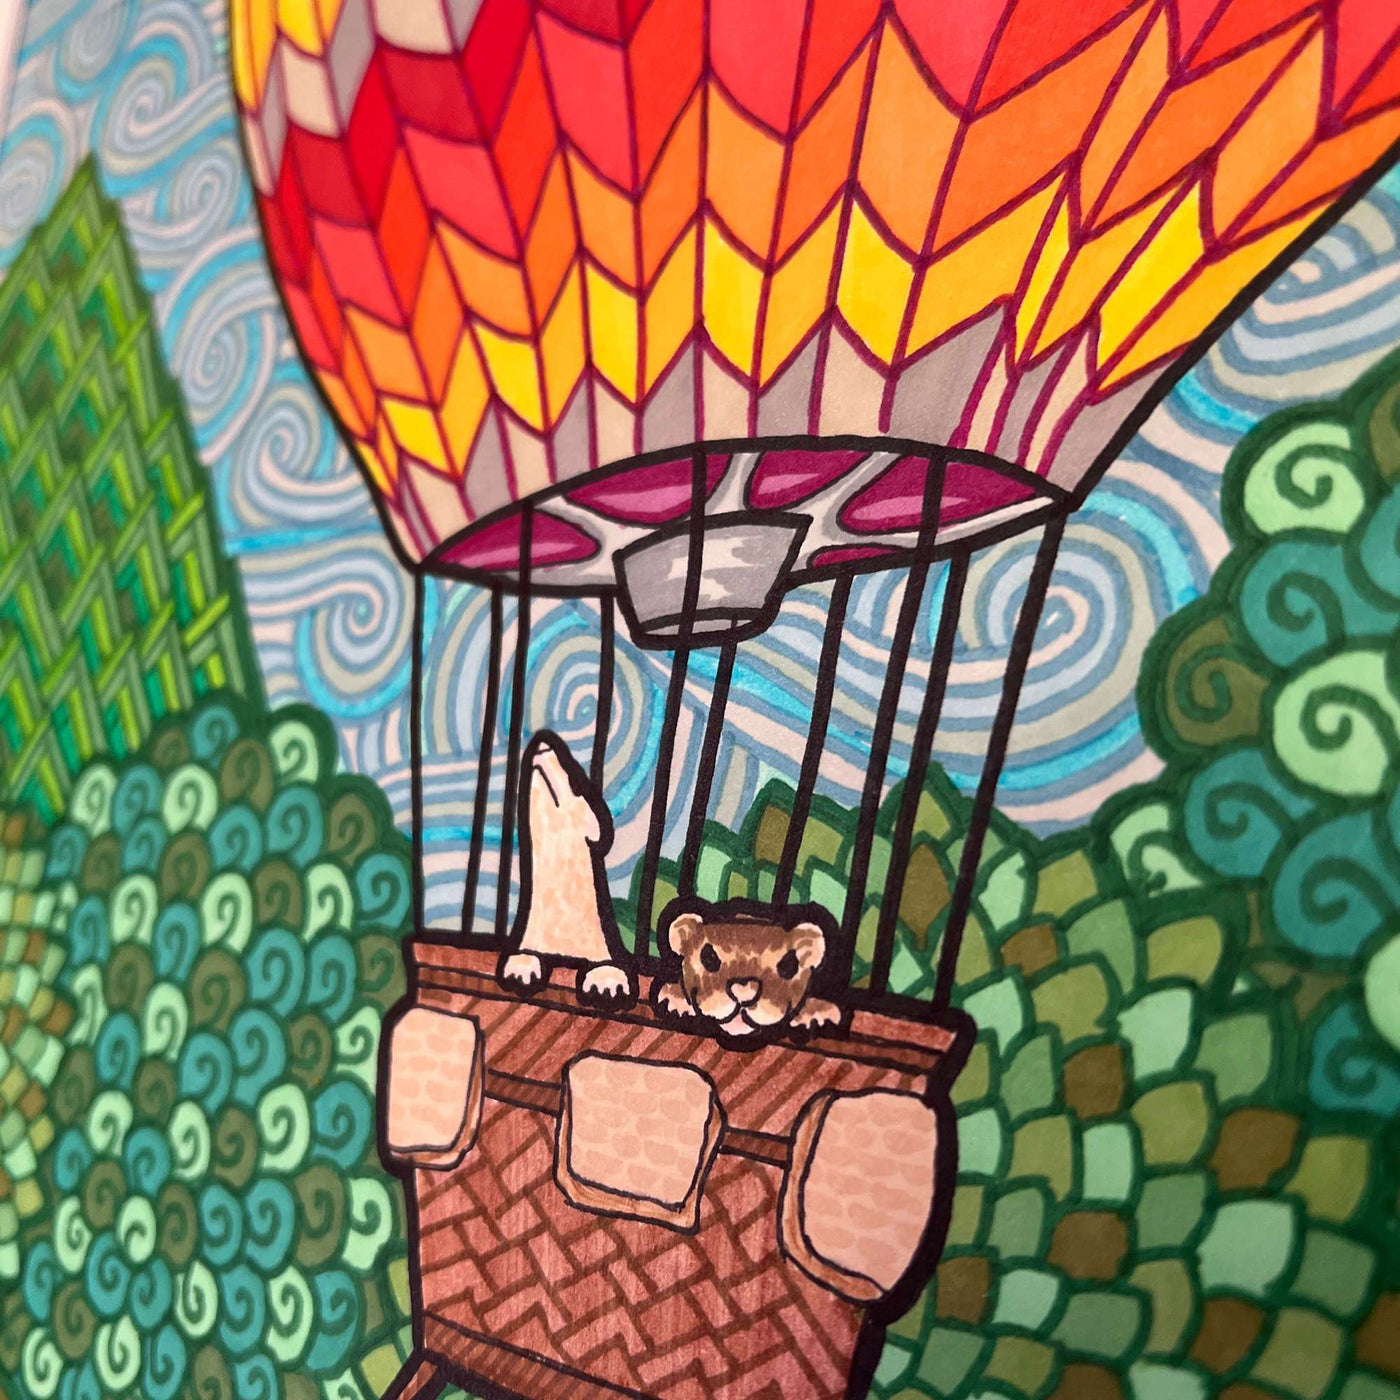 Vibrant close-up of an original marker illustration of ferrets enjoying a hot air balloon ride